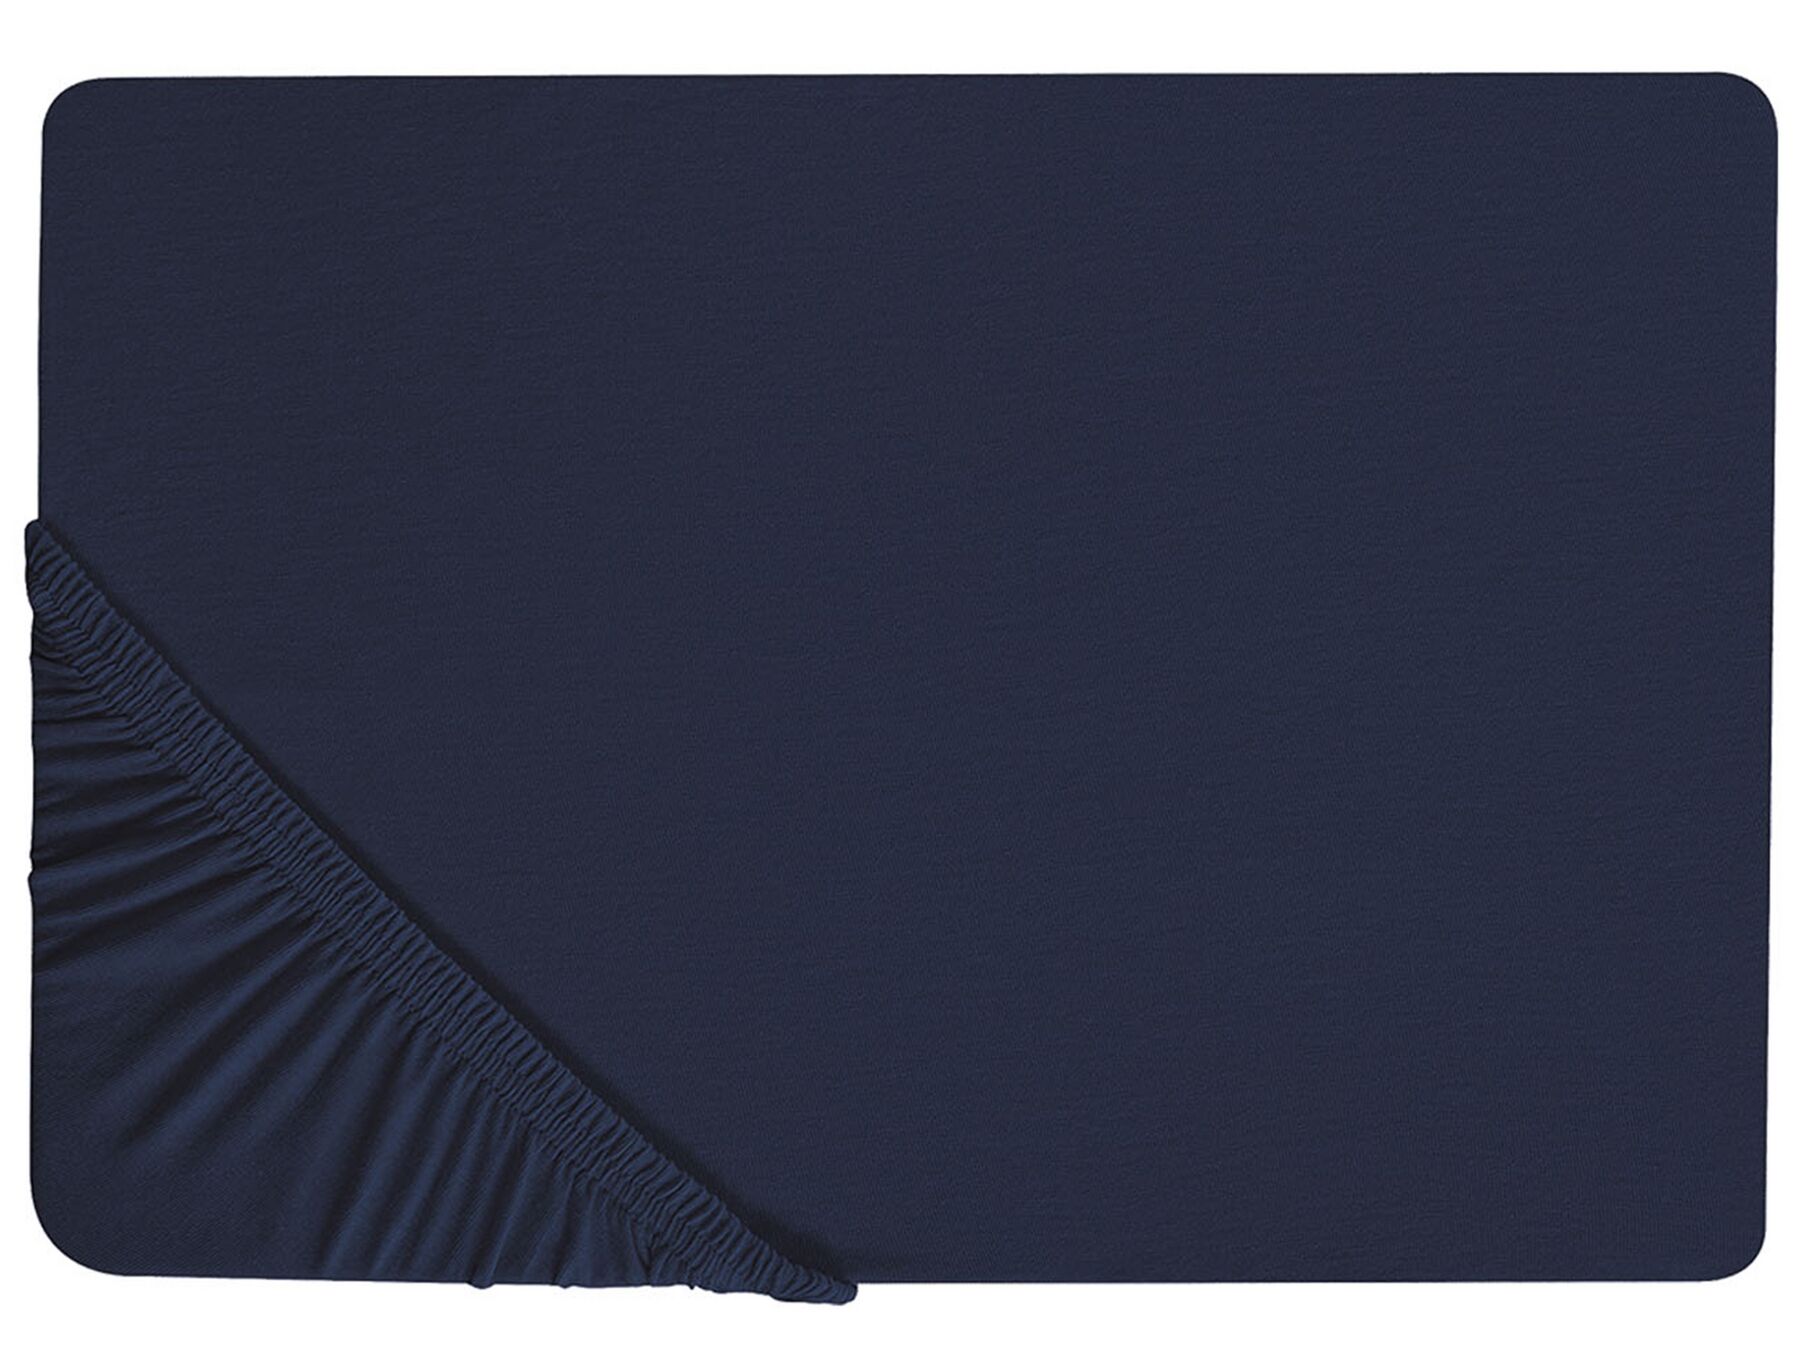 Påslakan 90 x 200 cm mörkblå HOFUF_816012